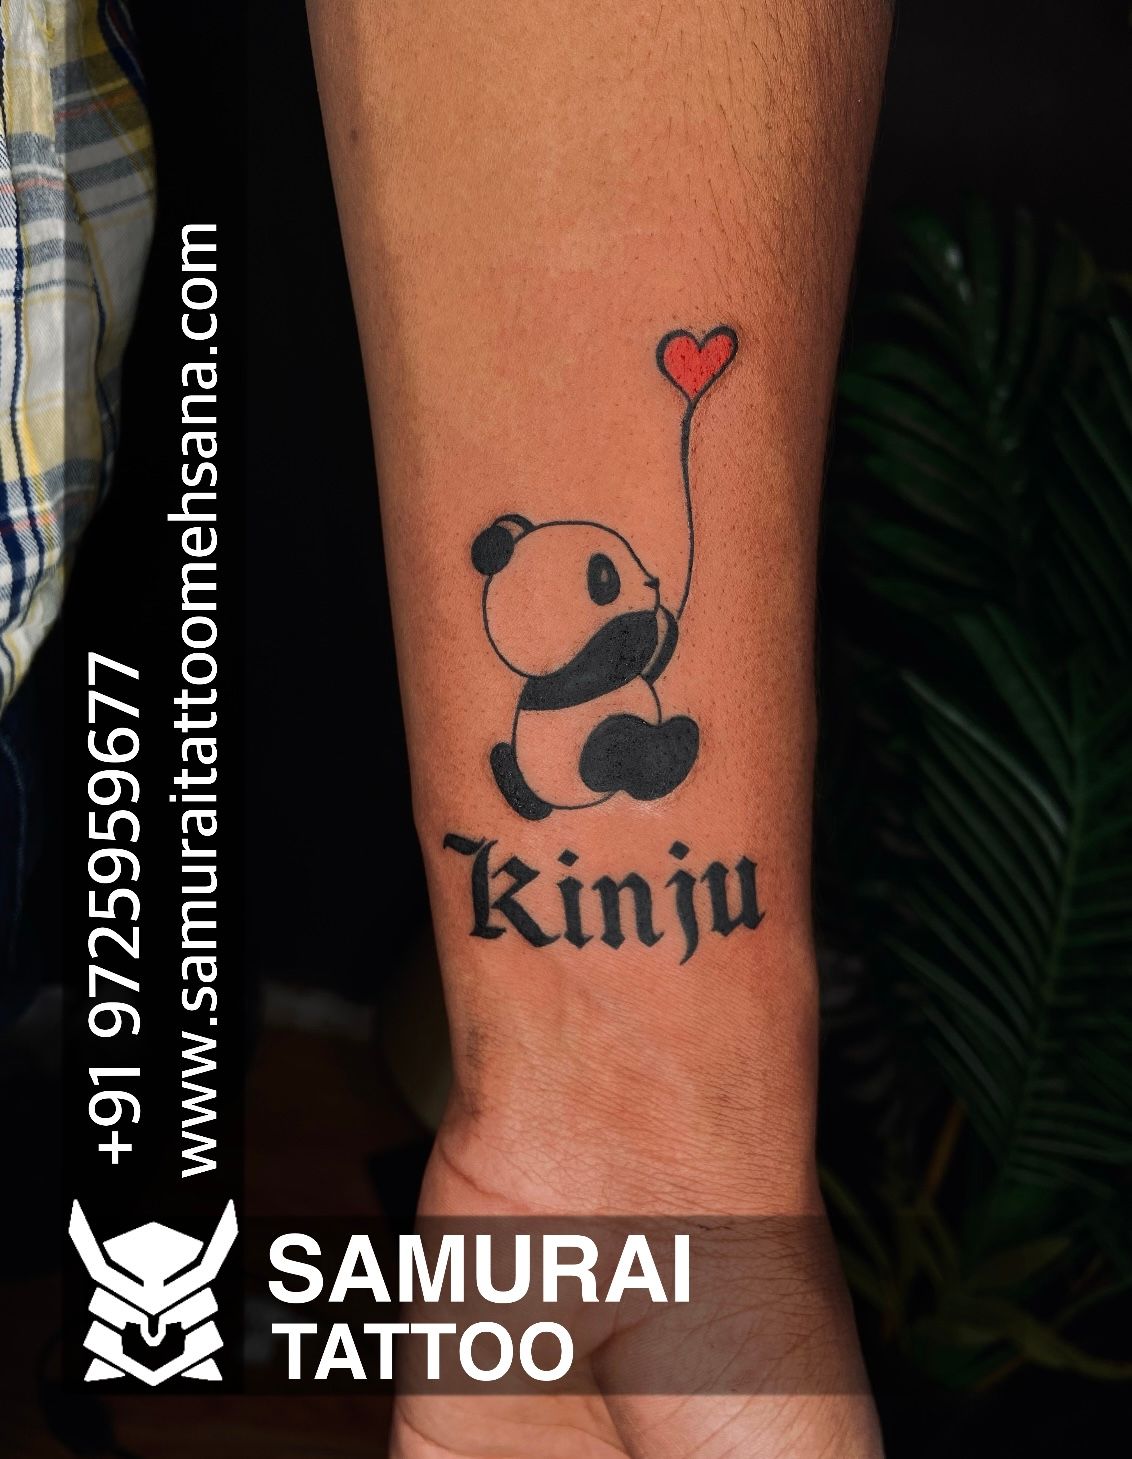 Tattoo uploaded by Samurai Tattoo mehsana  Panda tattoo Panda tattoo  design Panda tattoo ideas Tattoo for girls Girls tattoo ideas  Tattoodo